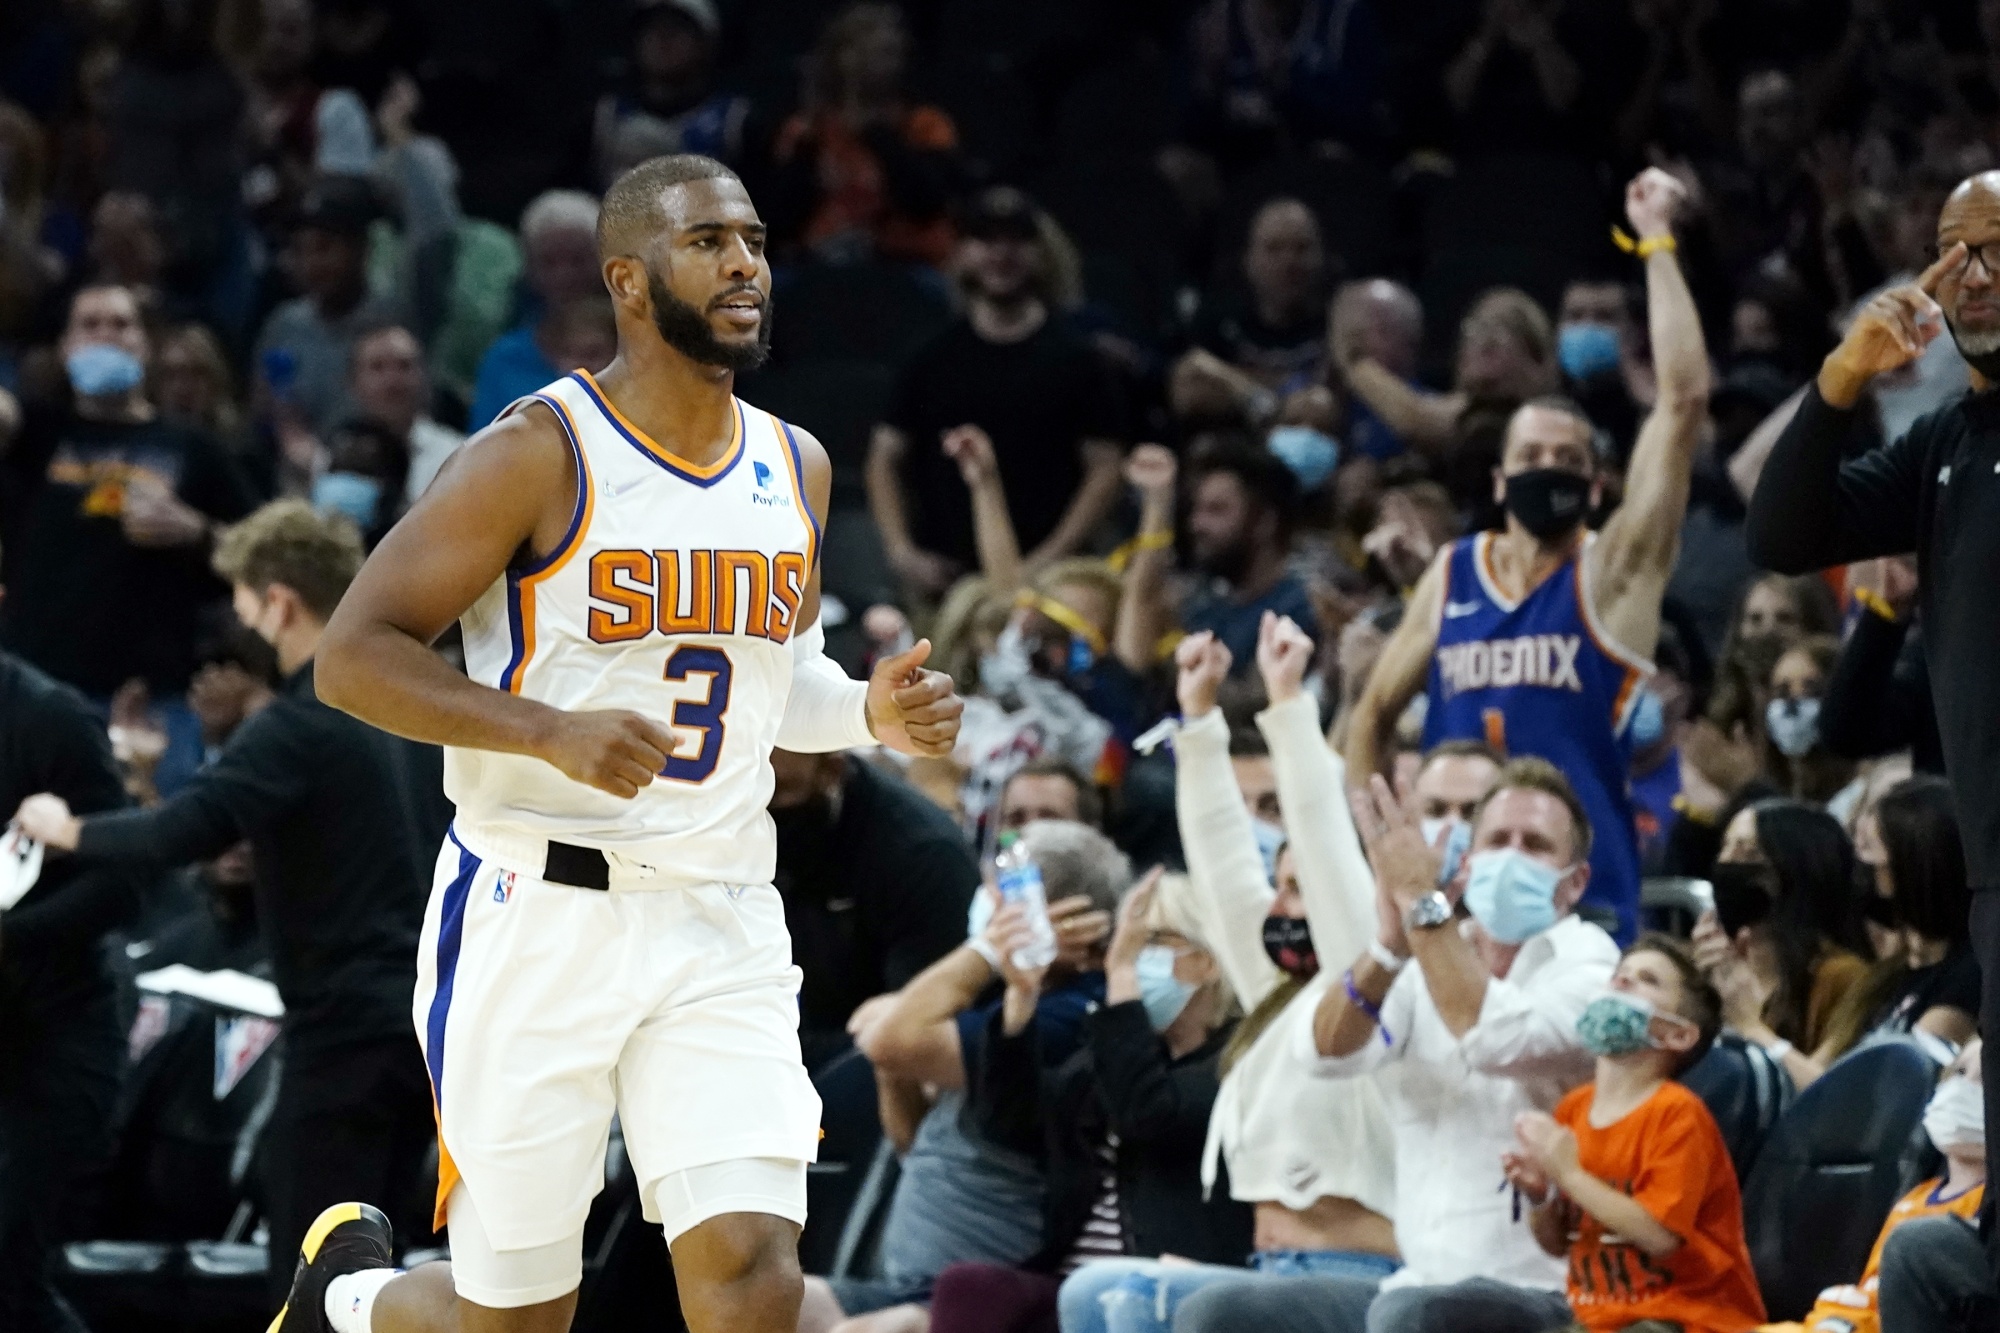 Mikal Bridges - Phoenix Suns - Game-Worn City Edition Jersey - 2021 NBA  Finals Game 1